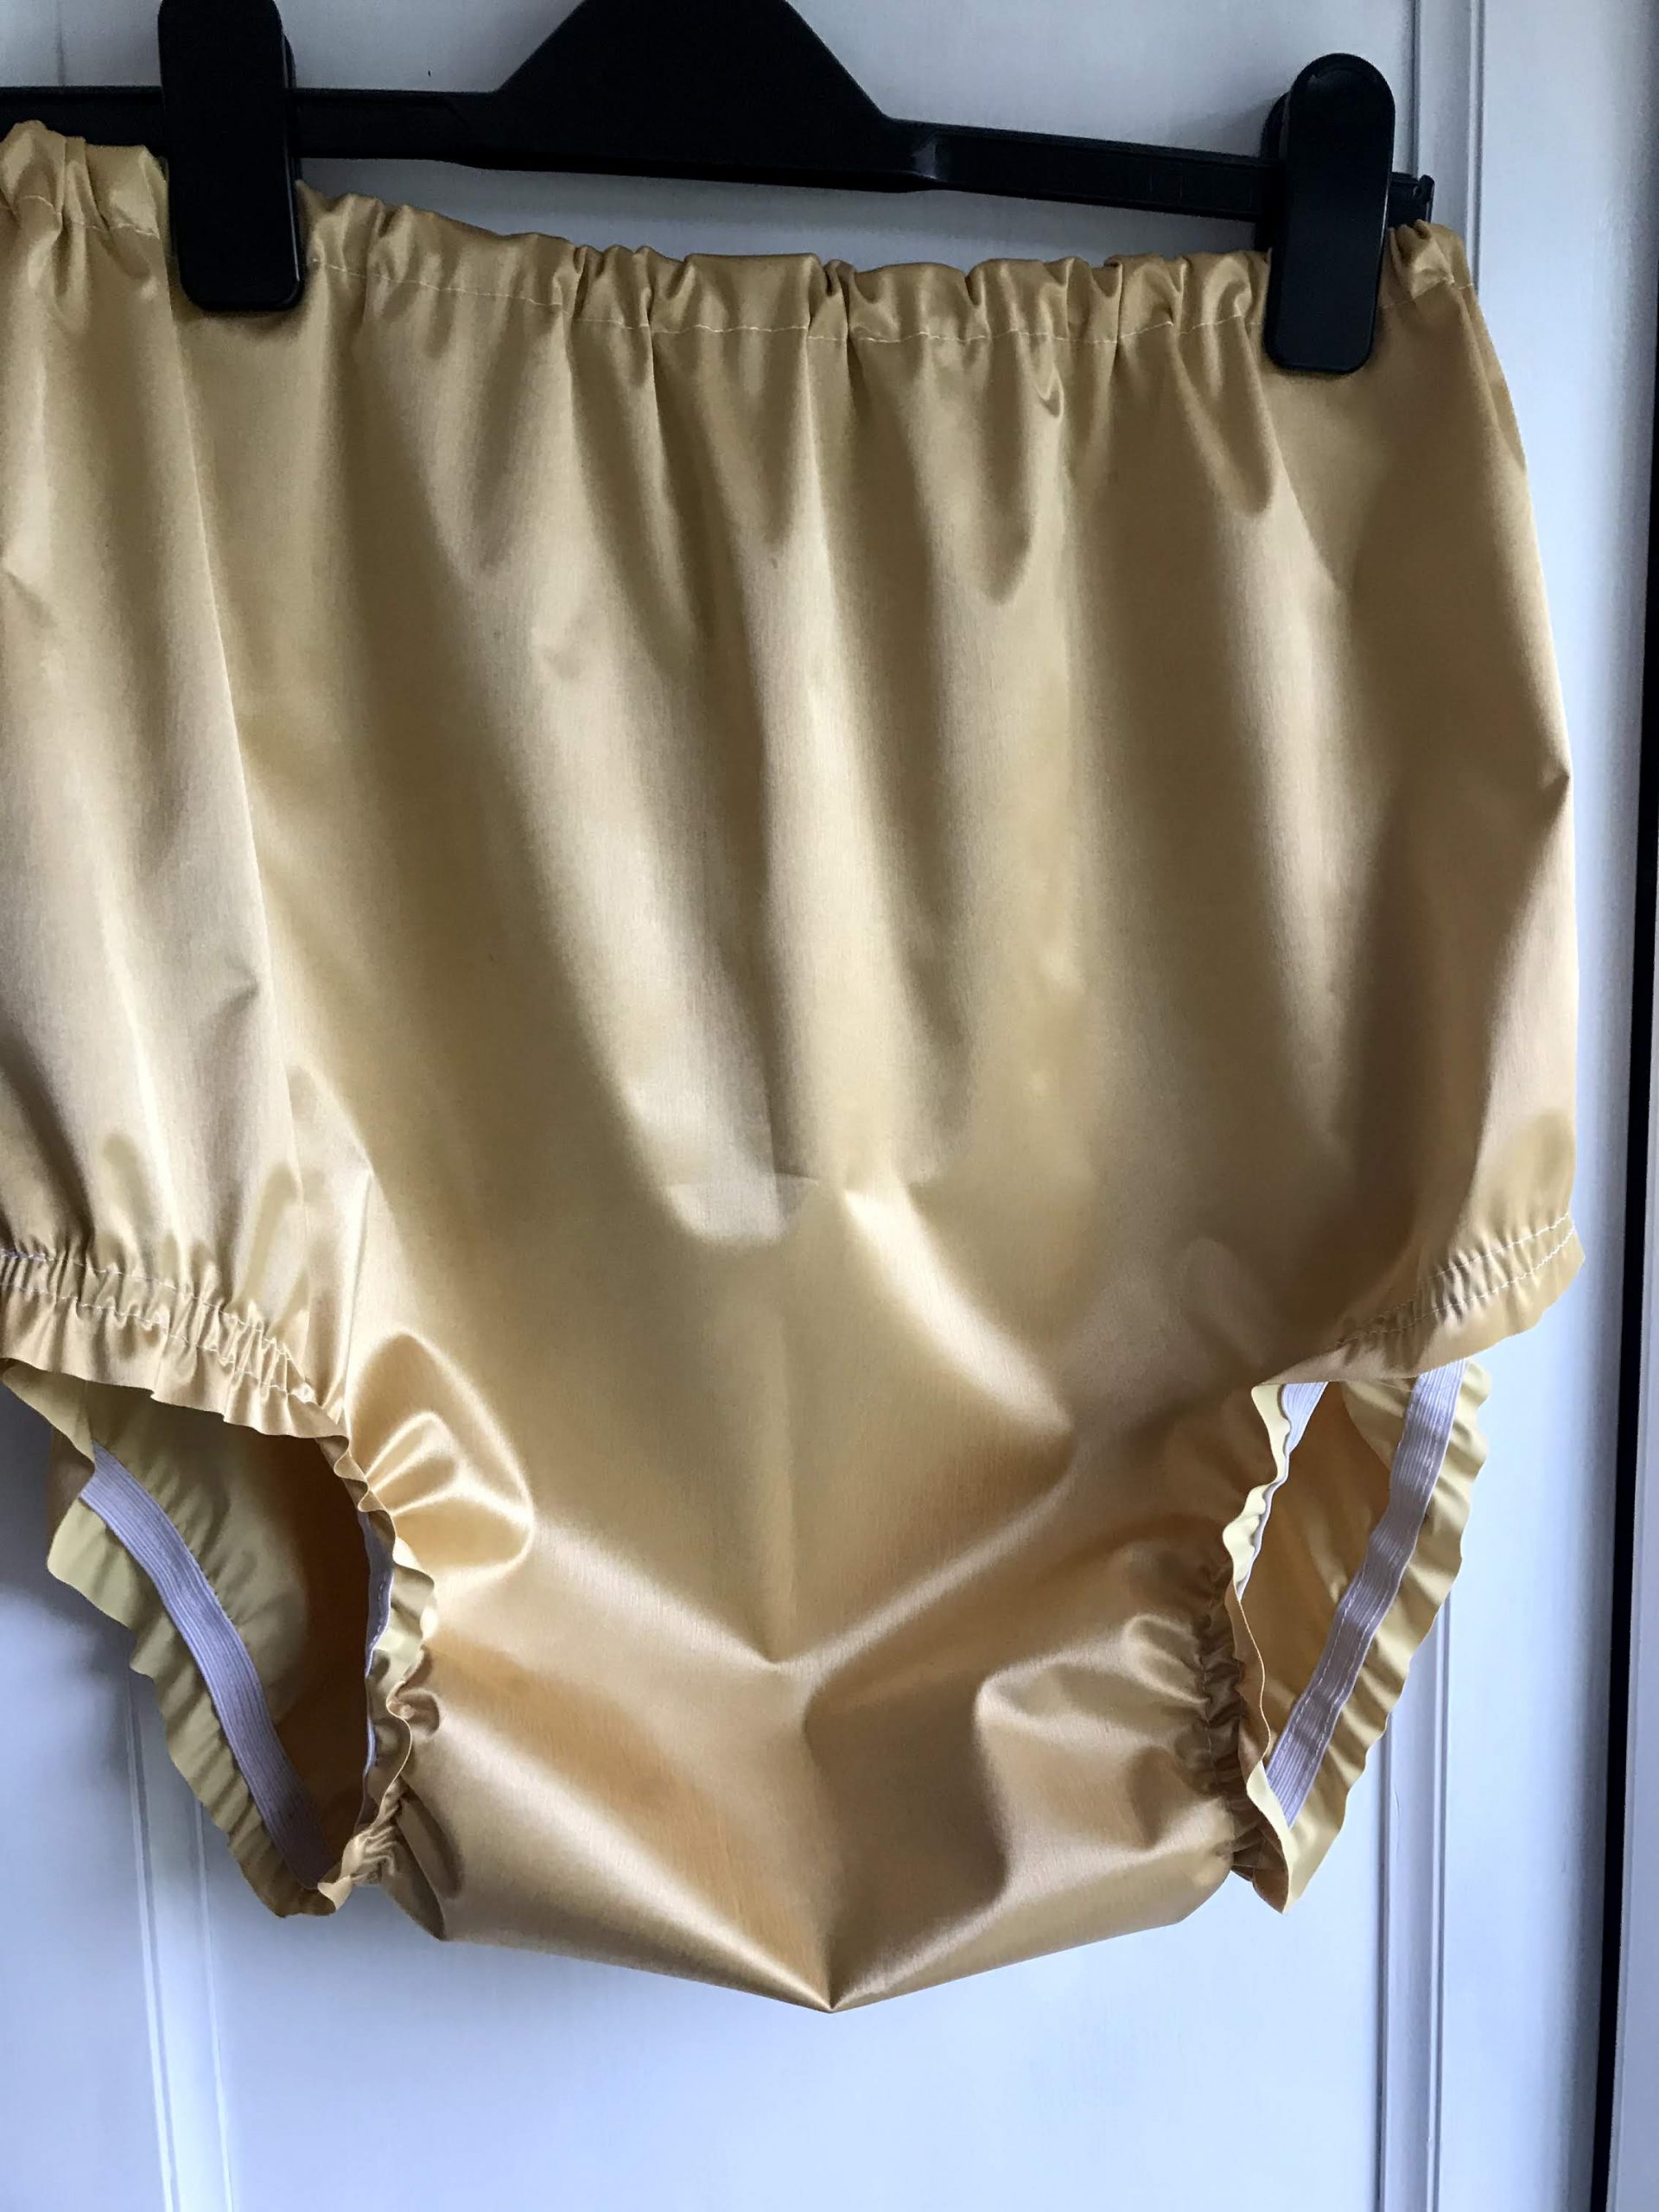 rubber-pants Archives - Hamilton Classics Rainwear